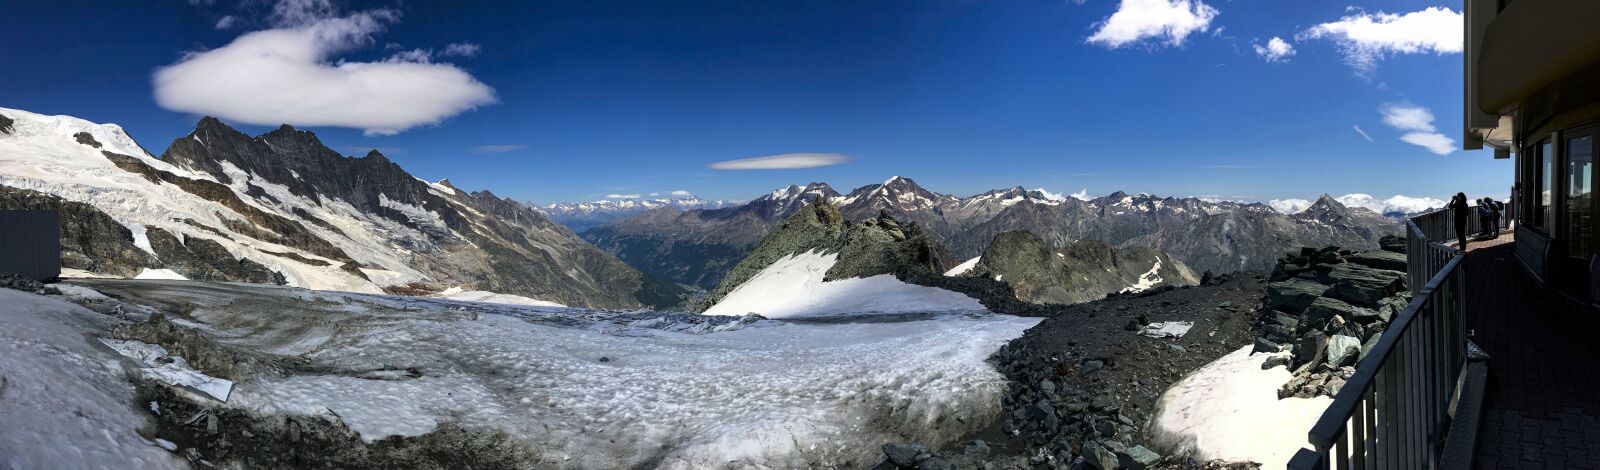 iPhone 7 Plus back camera 3.99mm f/1.8 sample photo. Allalin, swiss mountains, panorama photography